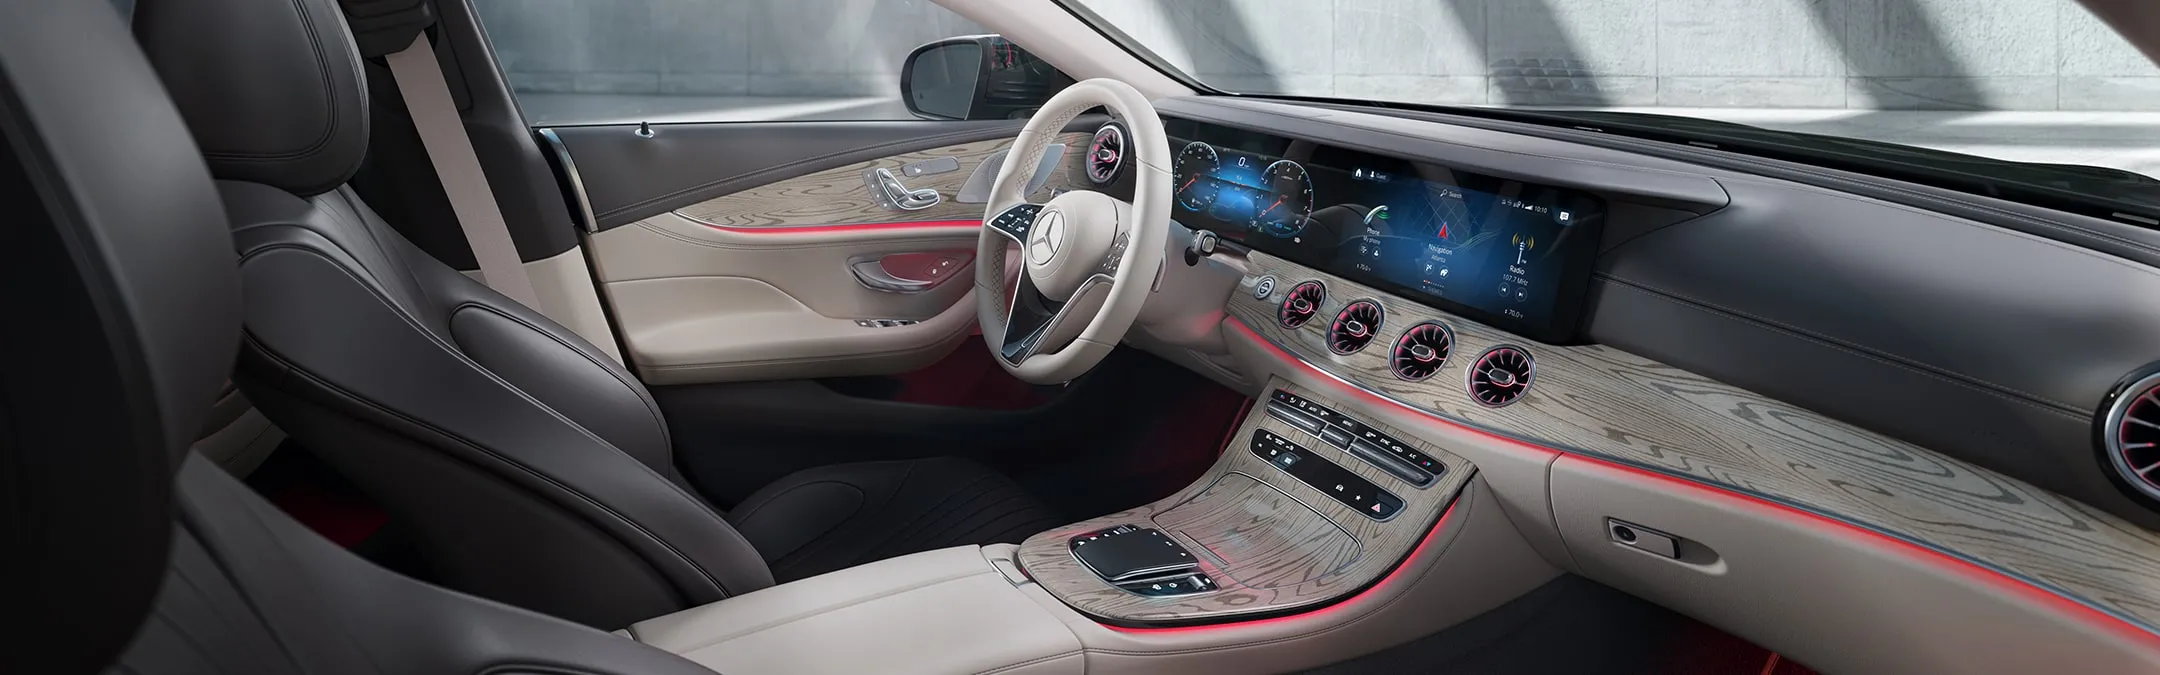 Mercedes W203 panel Overlay – buy in the online shop of